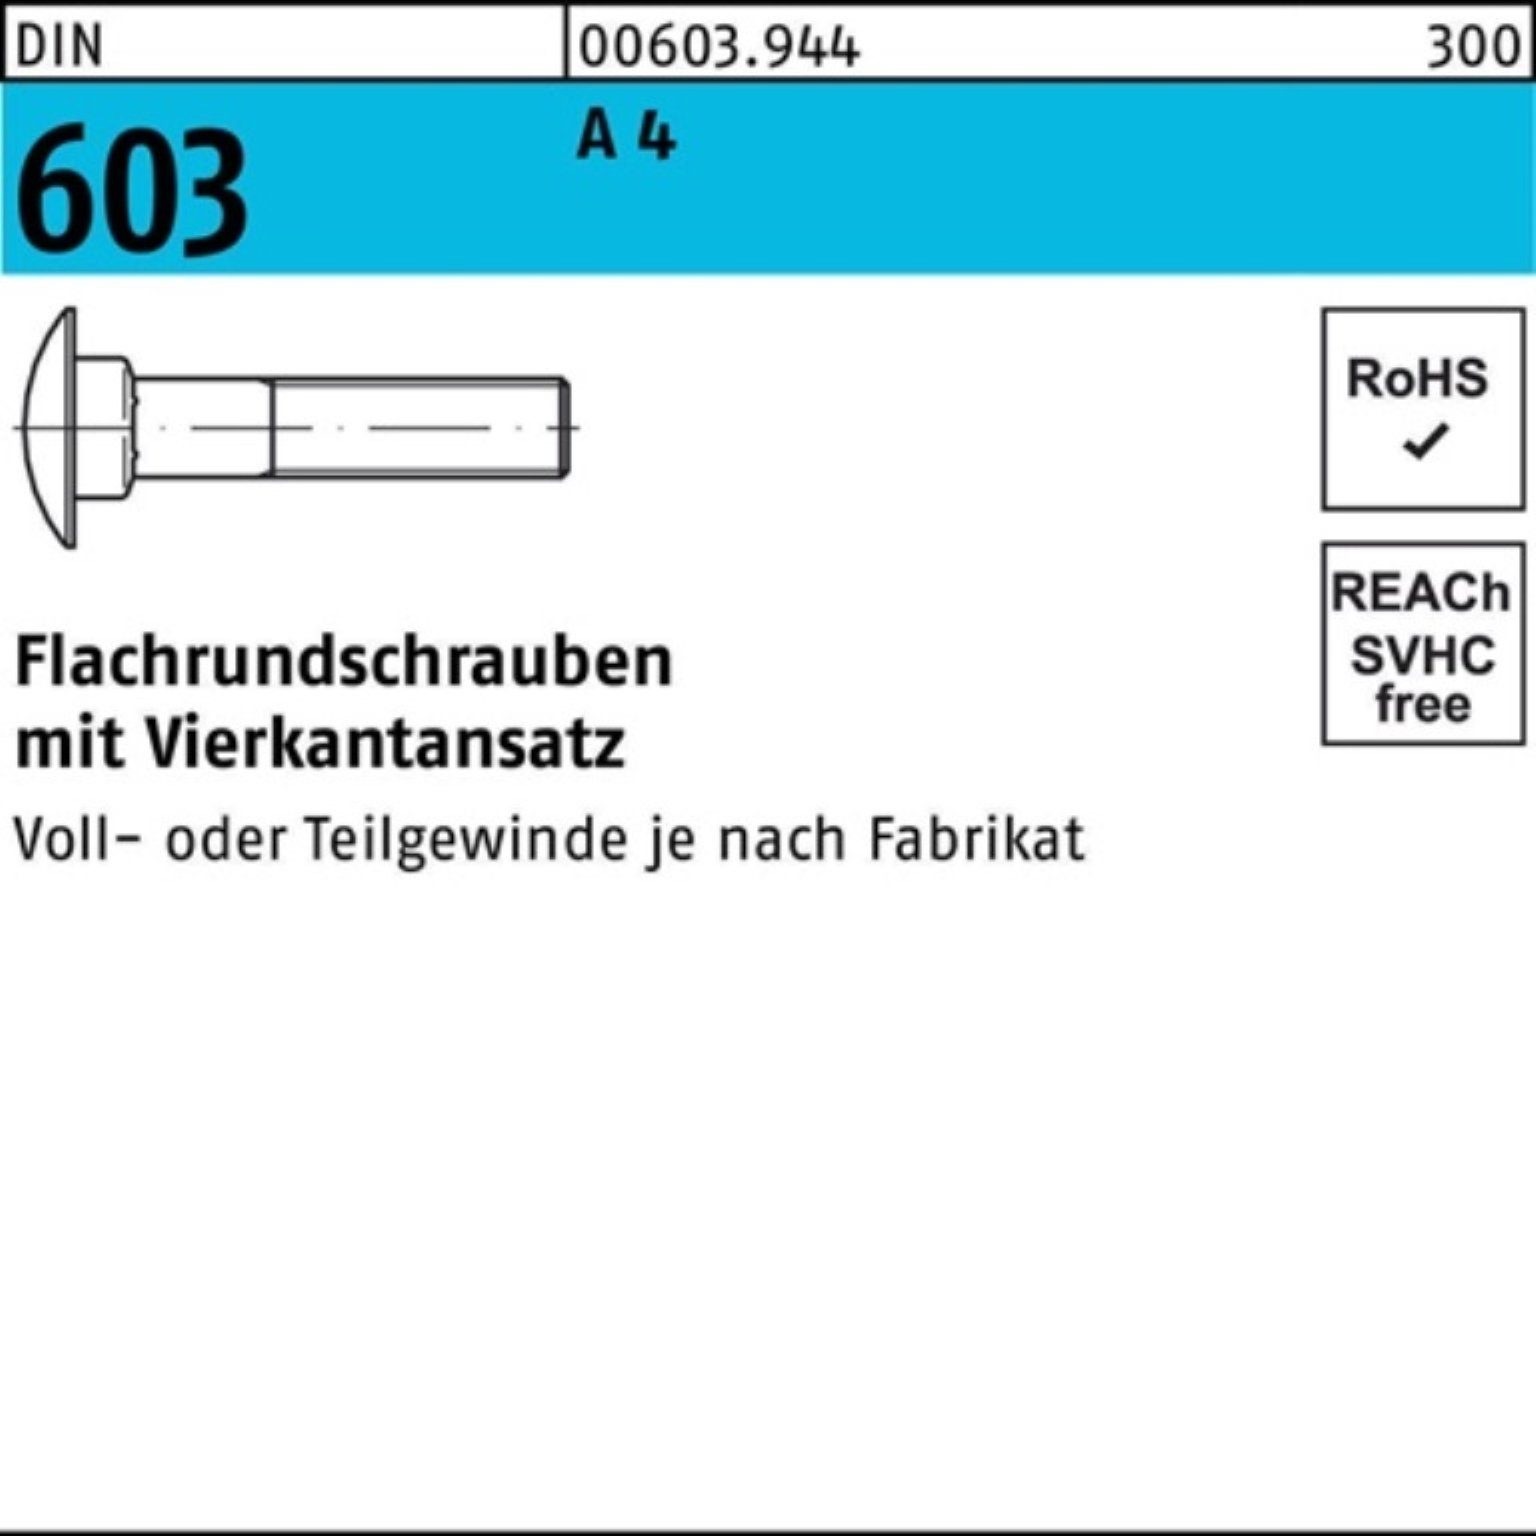 Reyher Schraube 100er Pack Flachrundschraube DIN 603 Vierkantansatz M16x 150 A 4 1 St